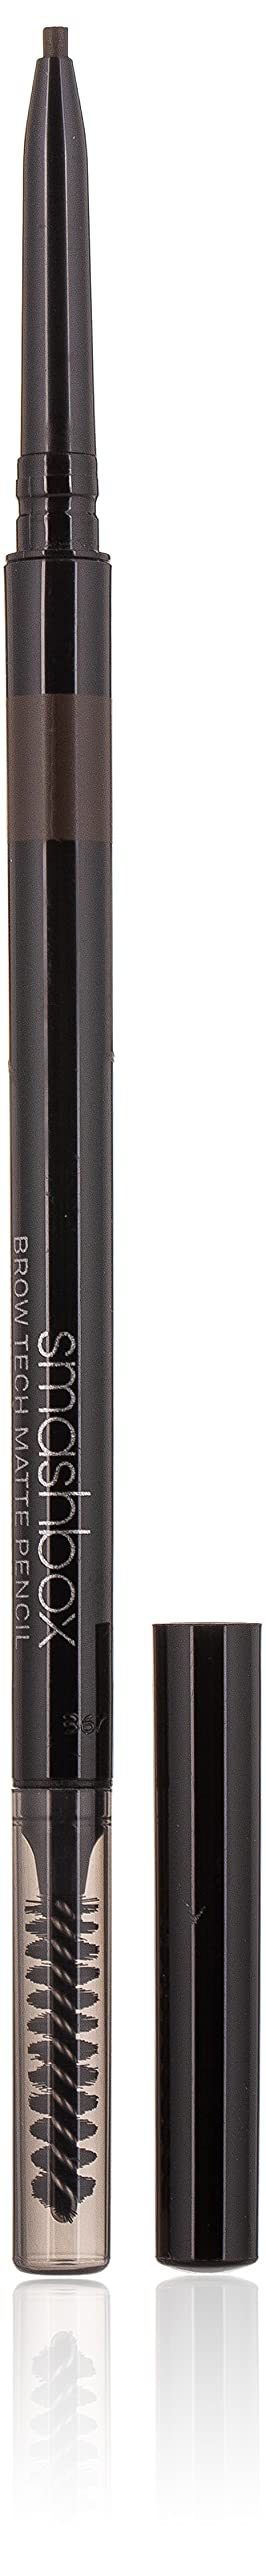 [Australia] - Smashbox Brow Tech Matte Pencil - Dark Brown by Smashbox 